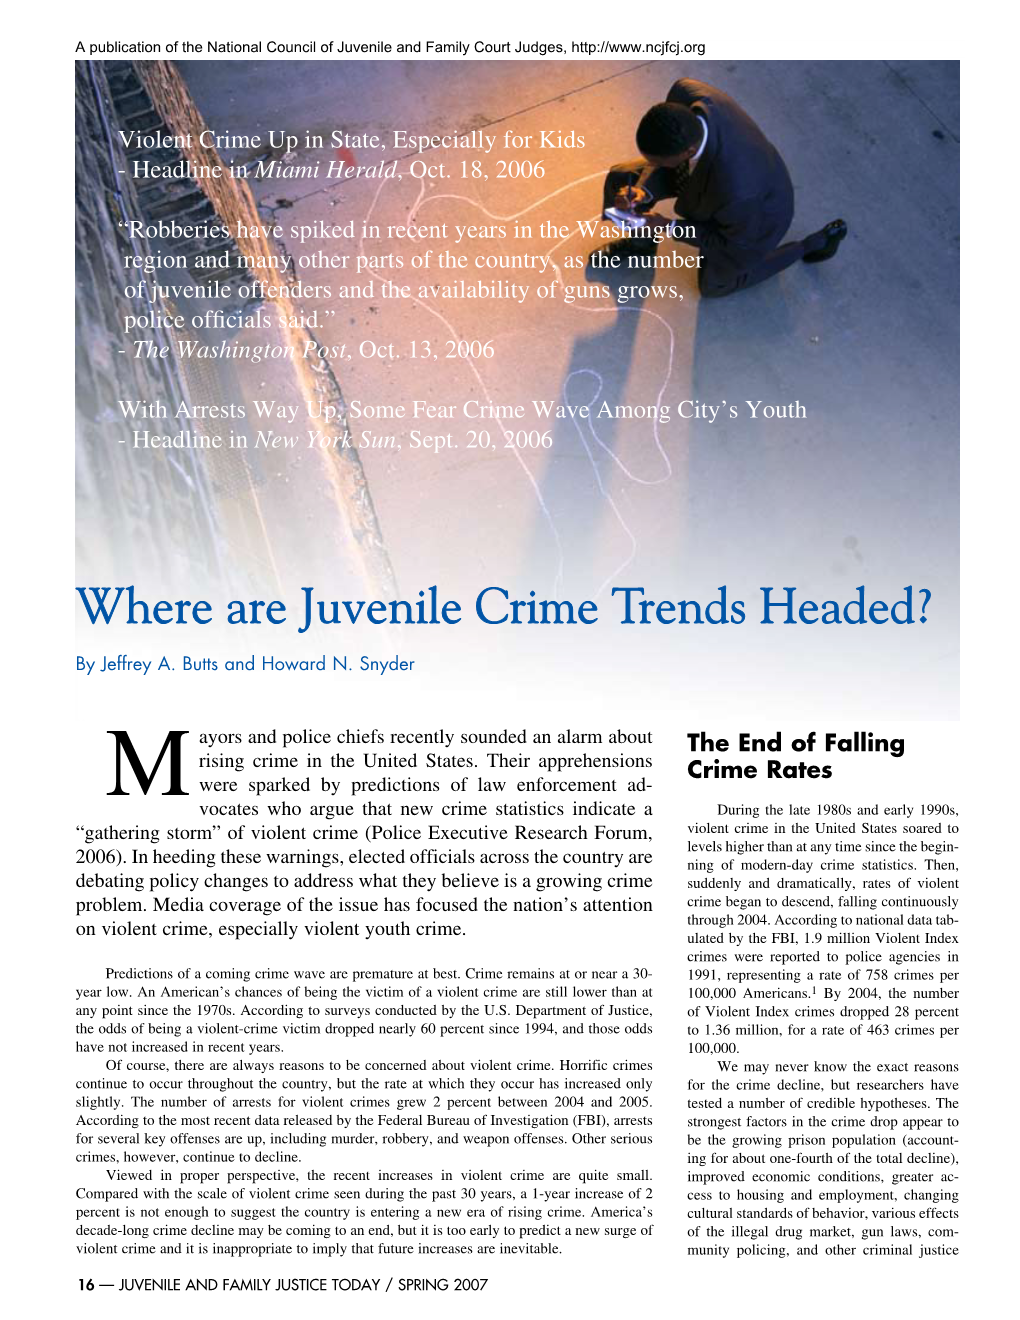 Where Are Juvenile Crime Trends Headed?